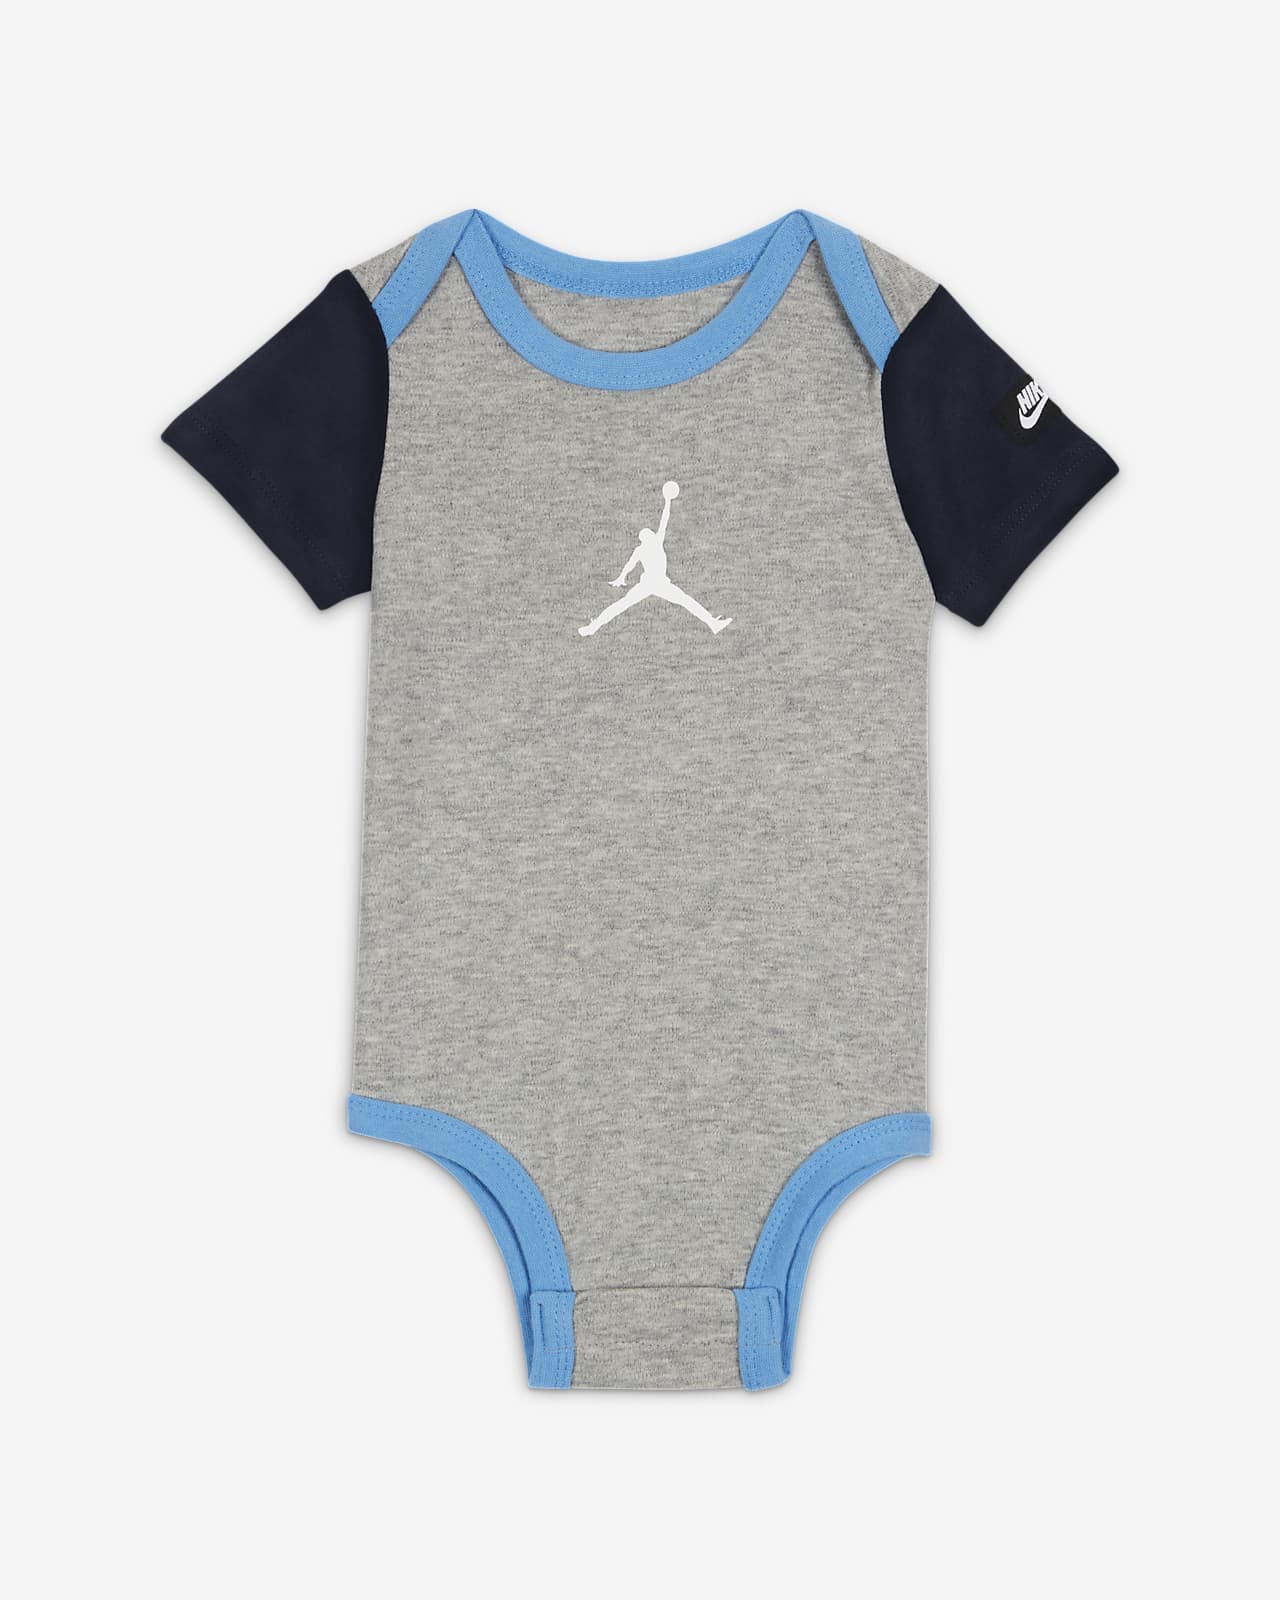 Jordan Baby (0-9M) Bodysuit and Blanket Set. Nike.com